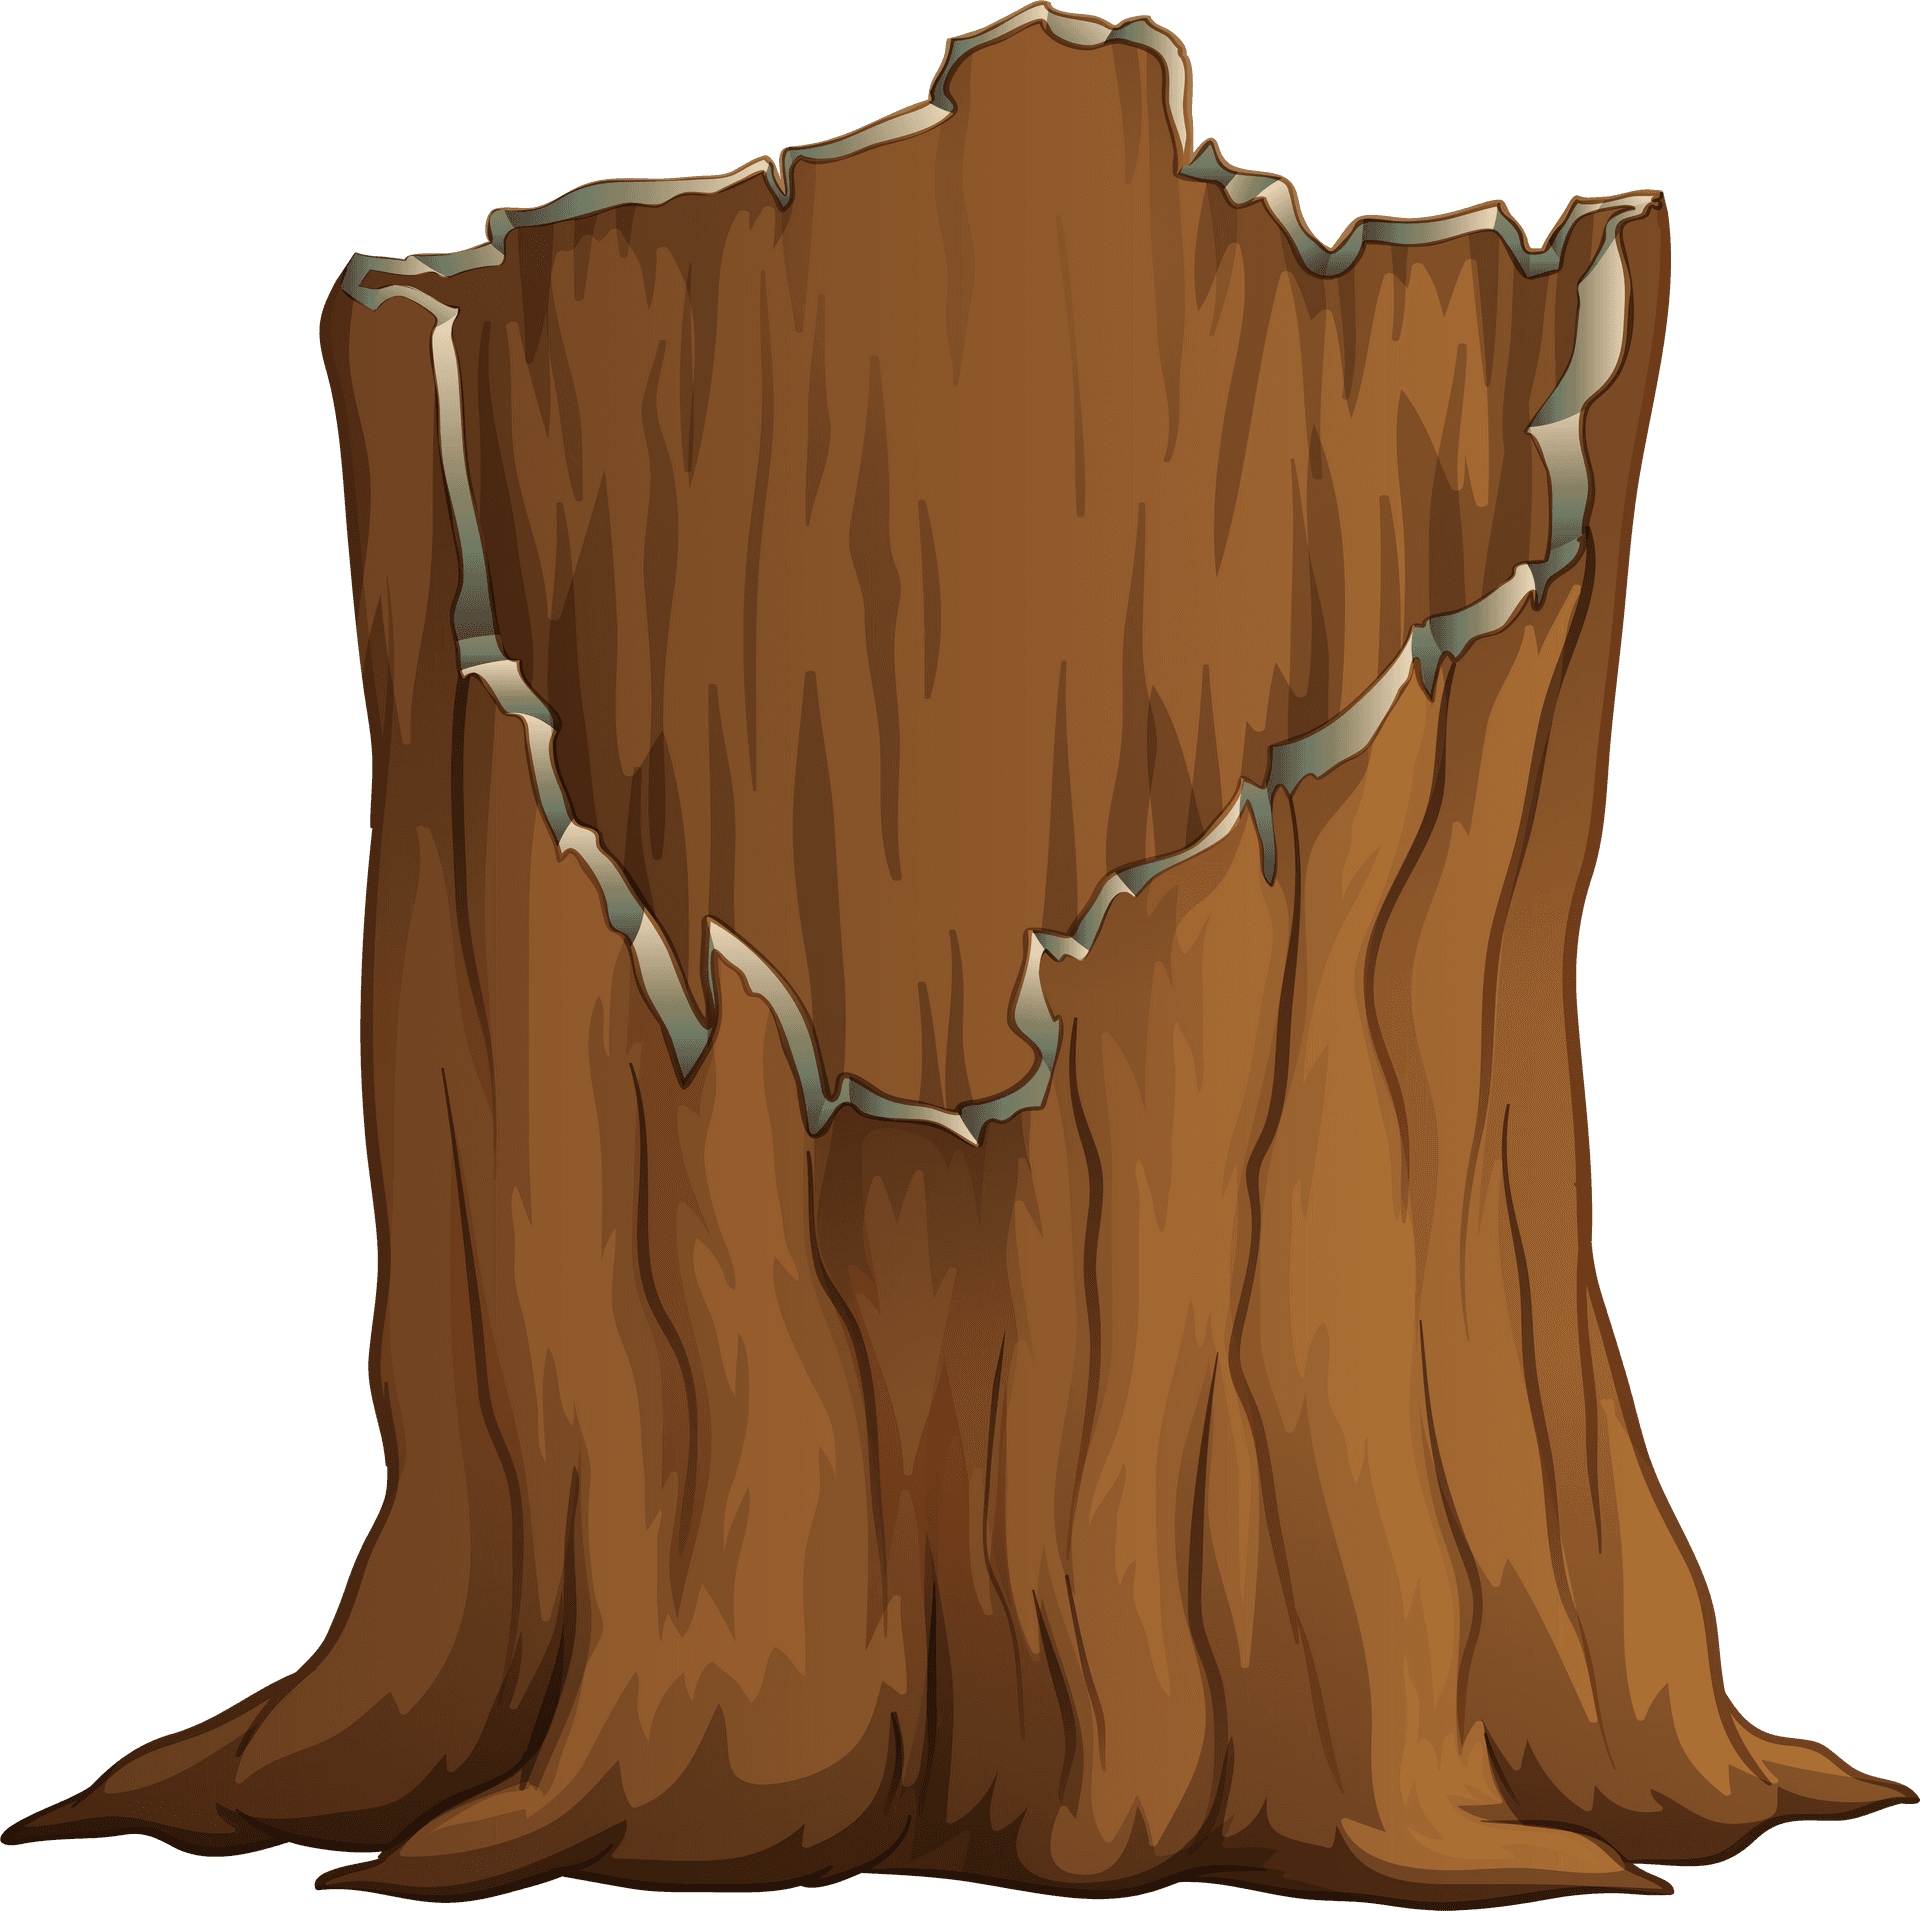 Cartoon Tree Trunk Illustration PNG